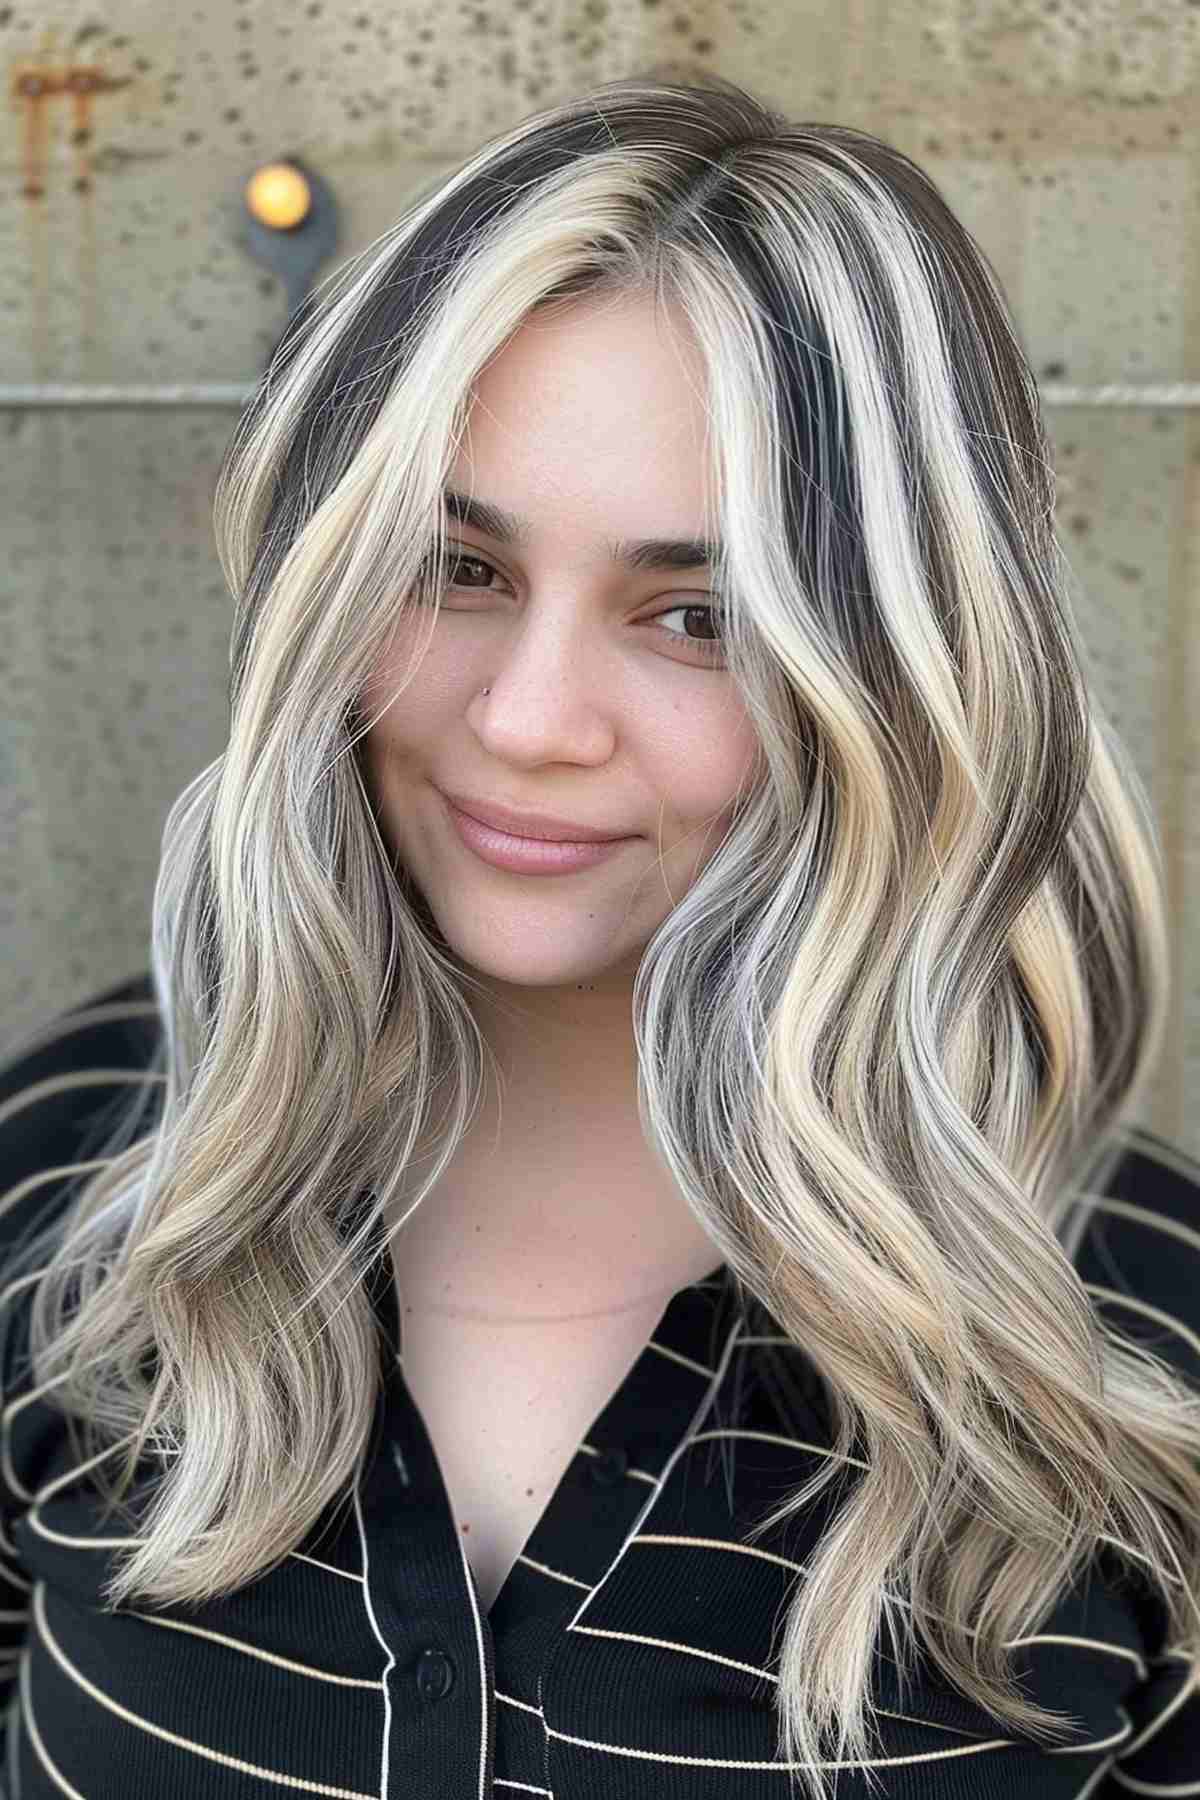 Medium-length dark hair with platinum blonde highlights and soft waves